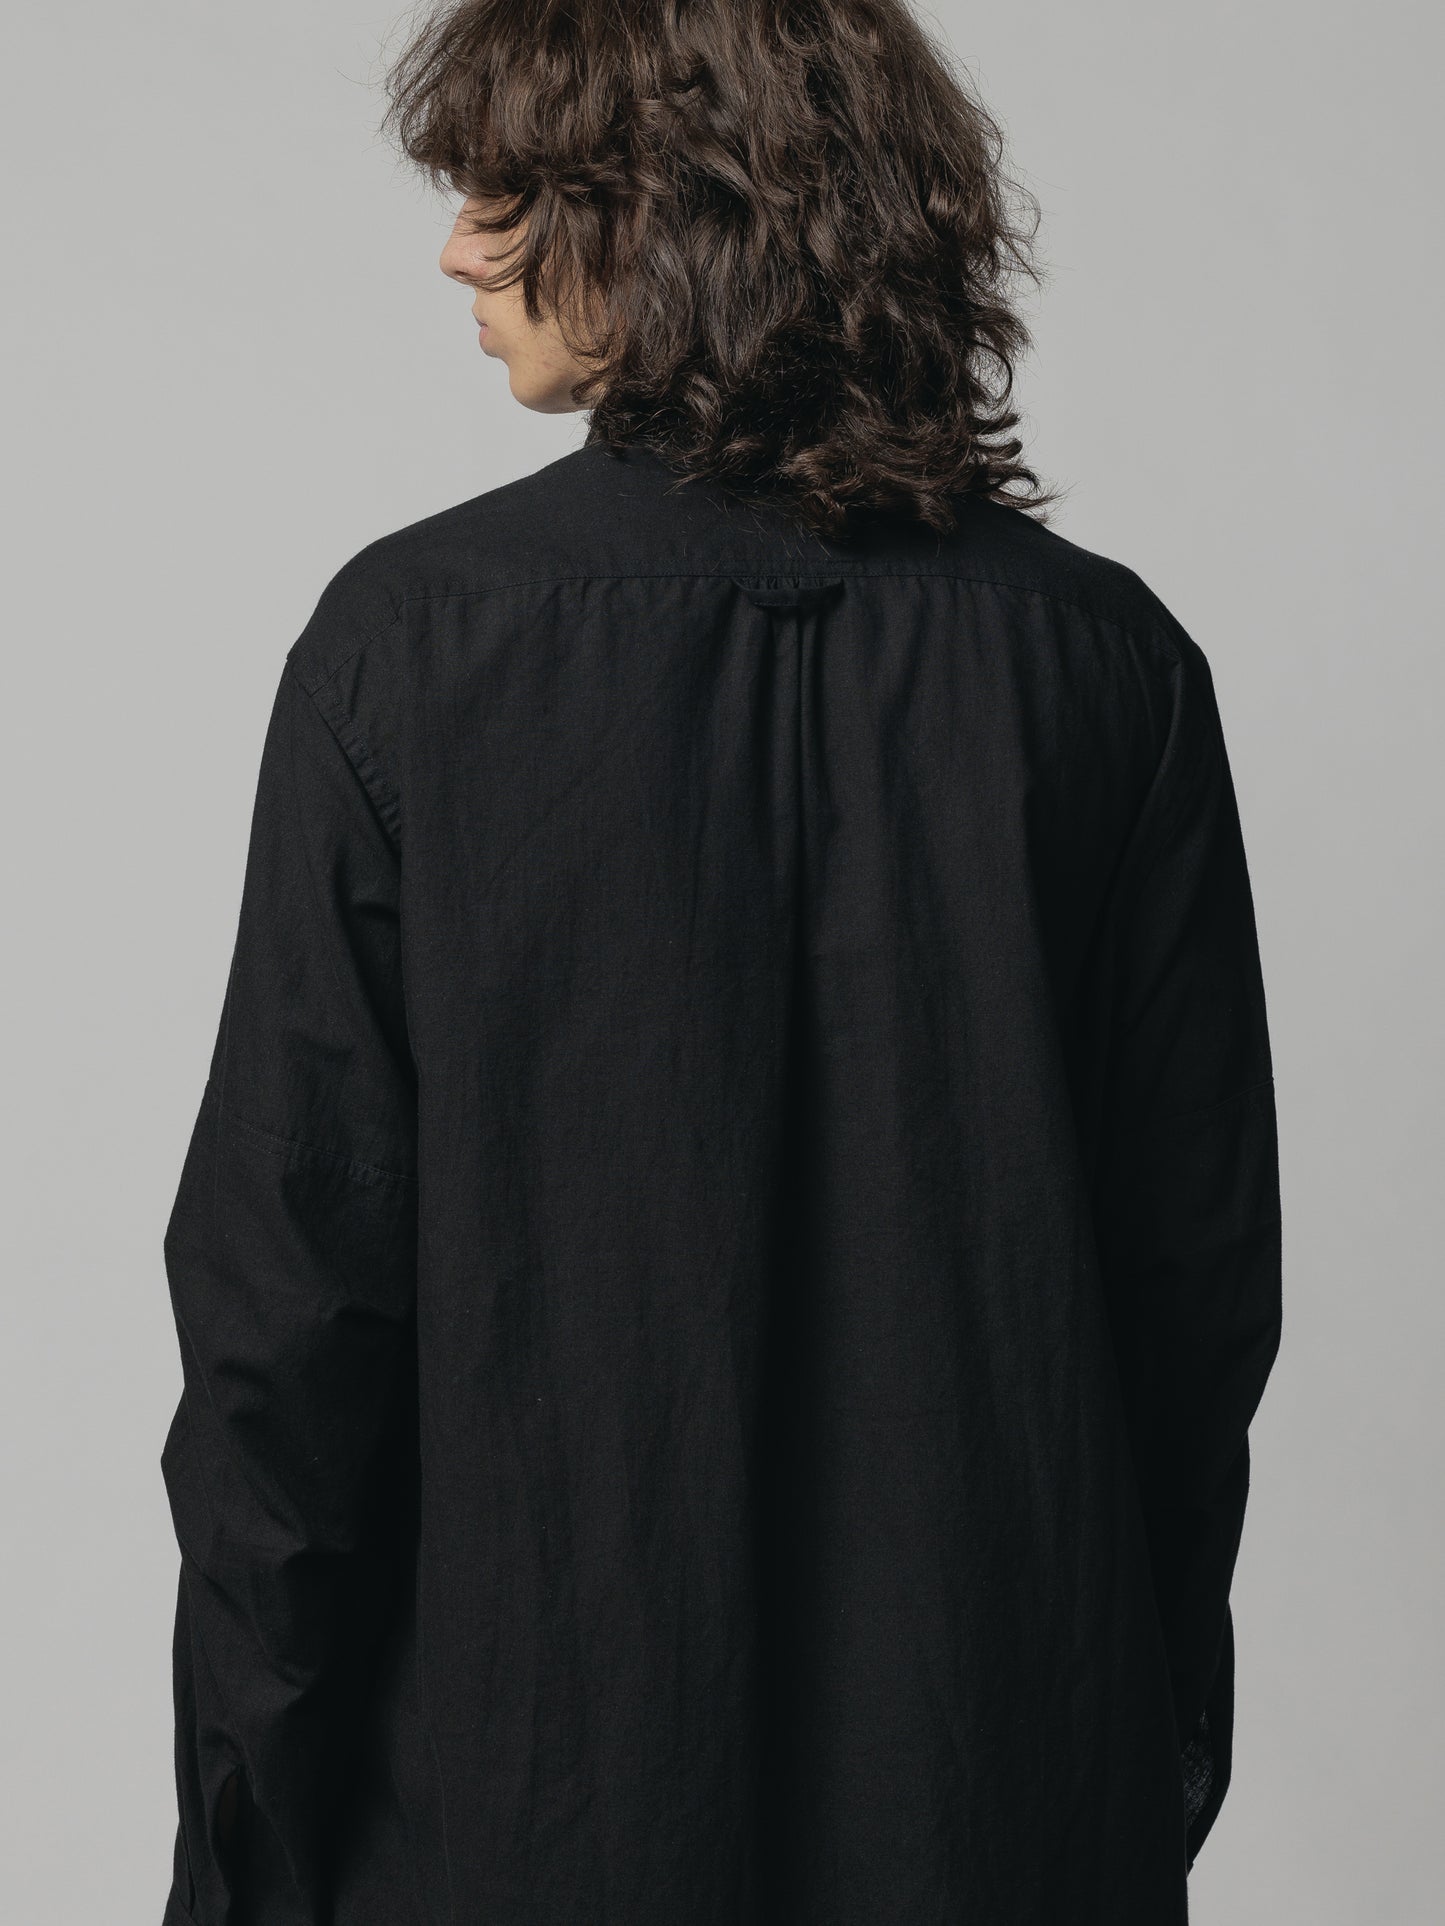 Black Cotton Linen Band Collar Shirt